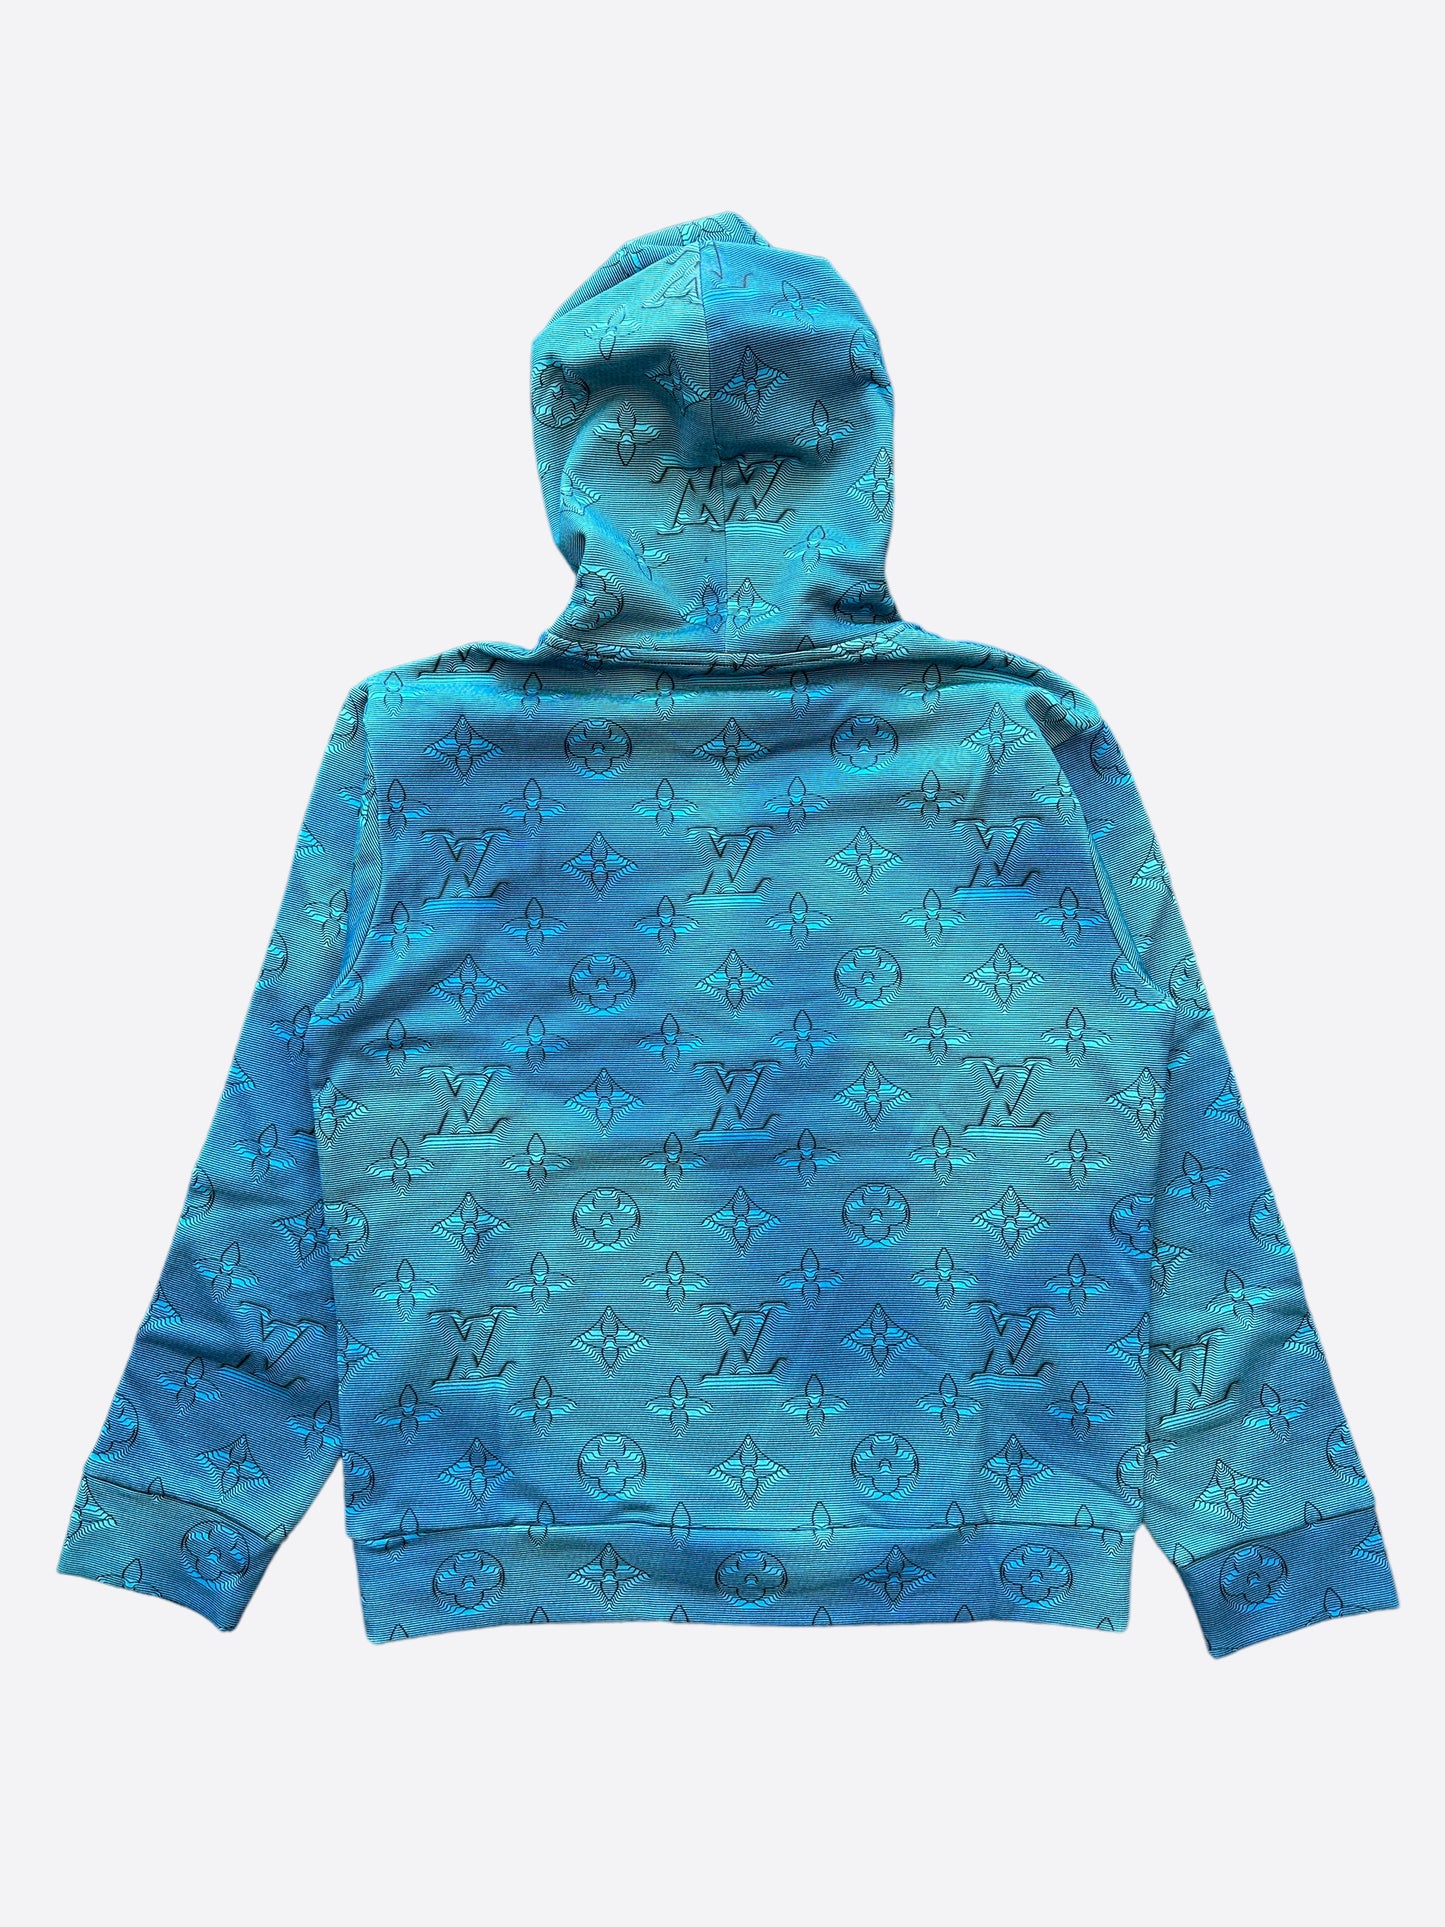 vuitton blue hoodie